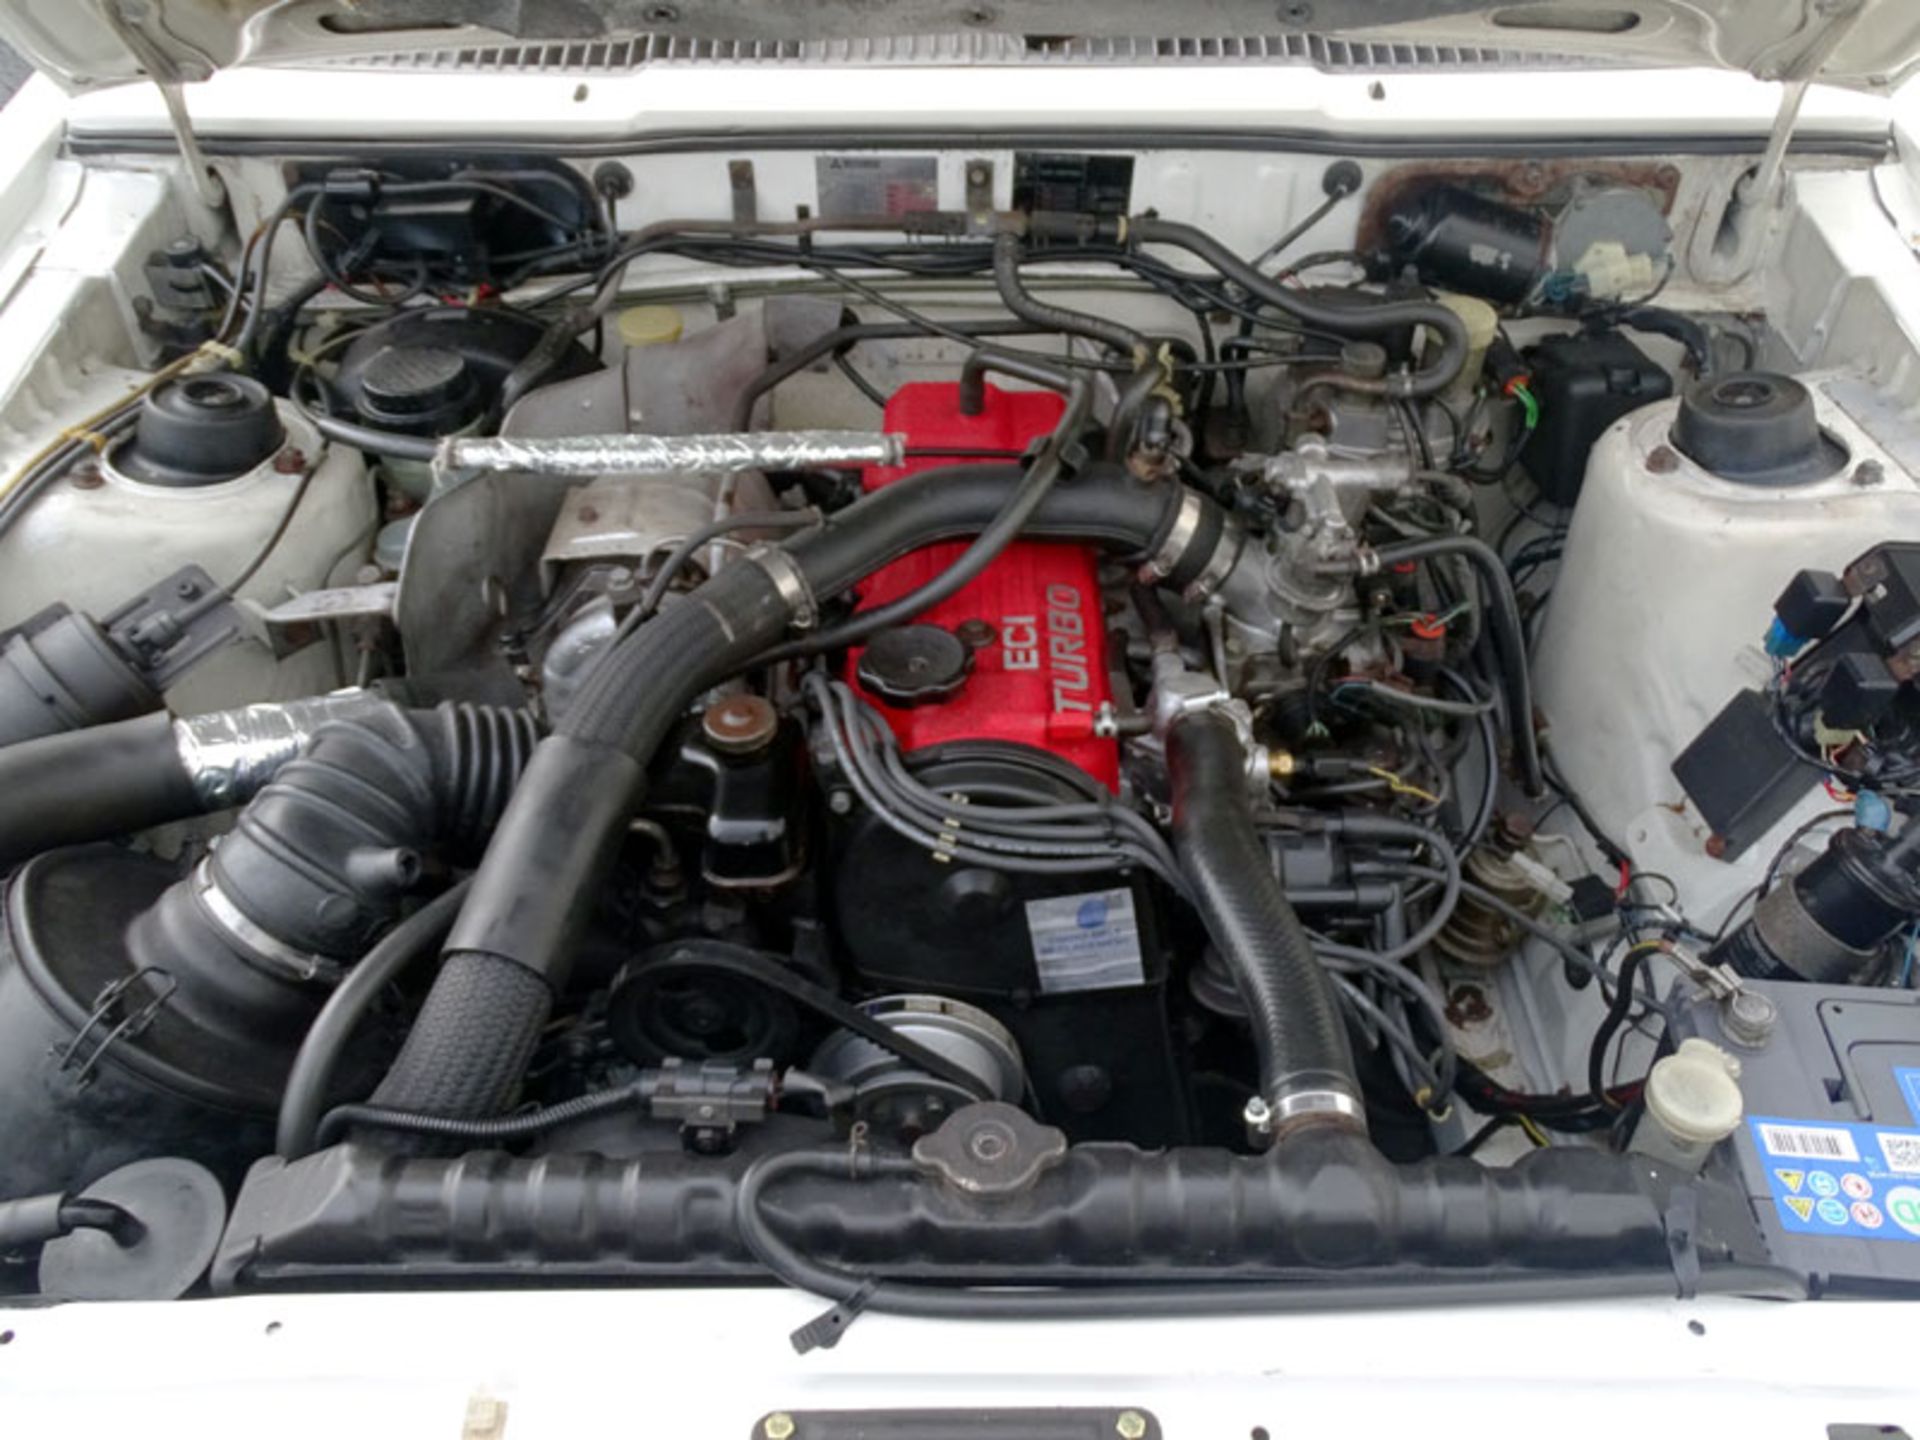 1987 Mitsubishi Starion Turbo - Image 7 of 8